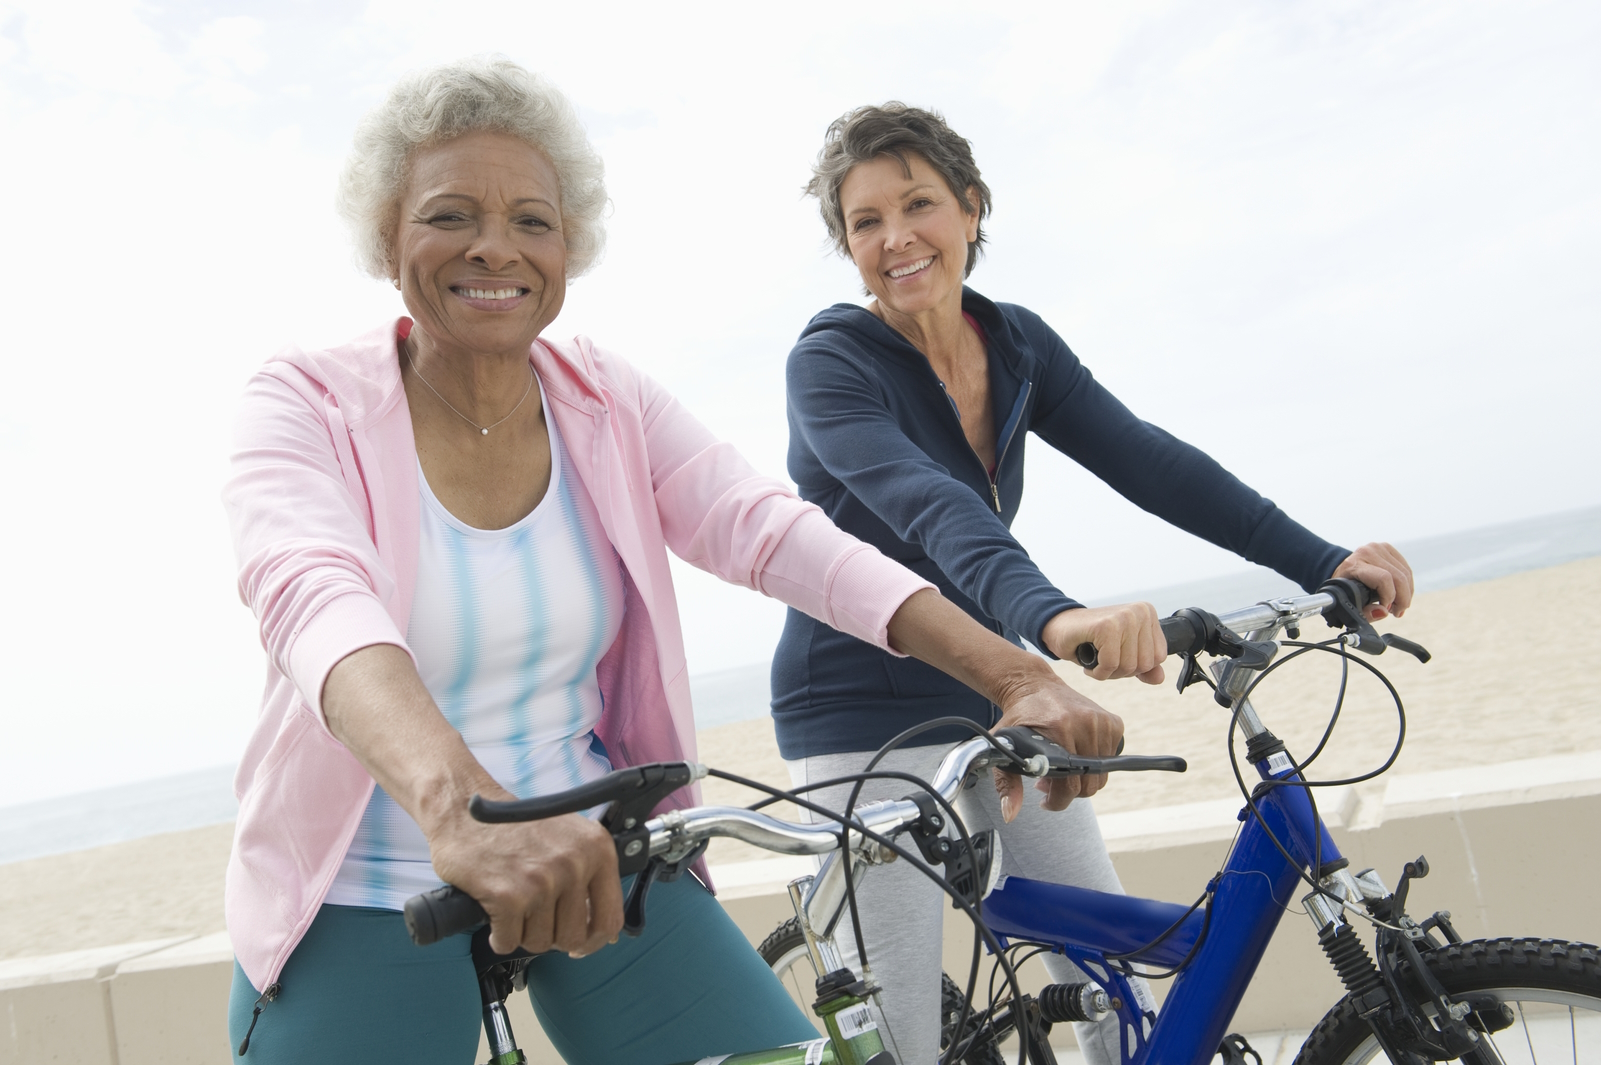 osteoarthritis knee pain exercising riding bicycles